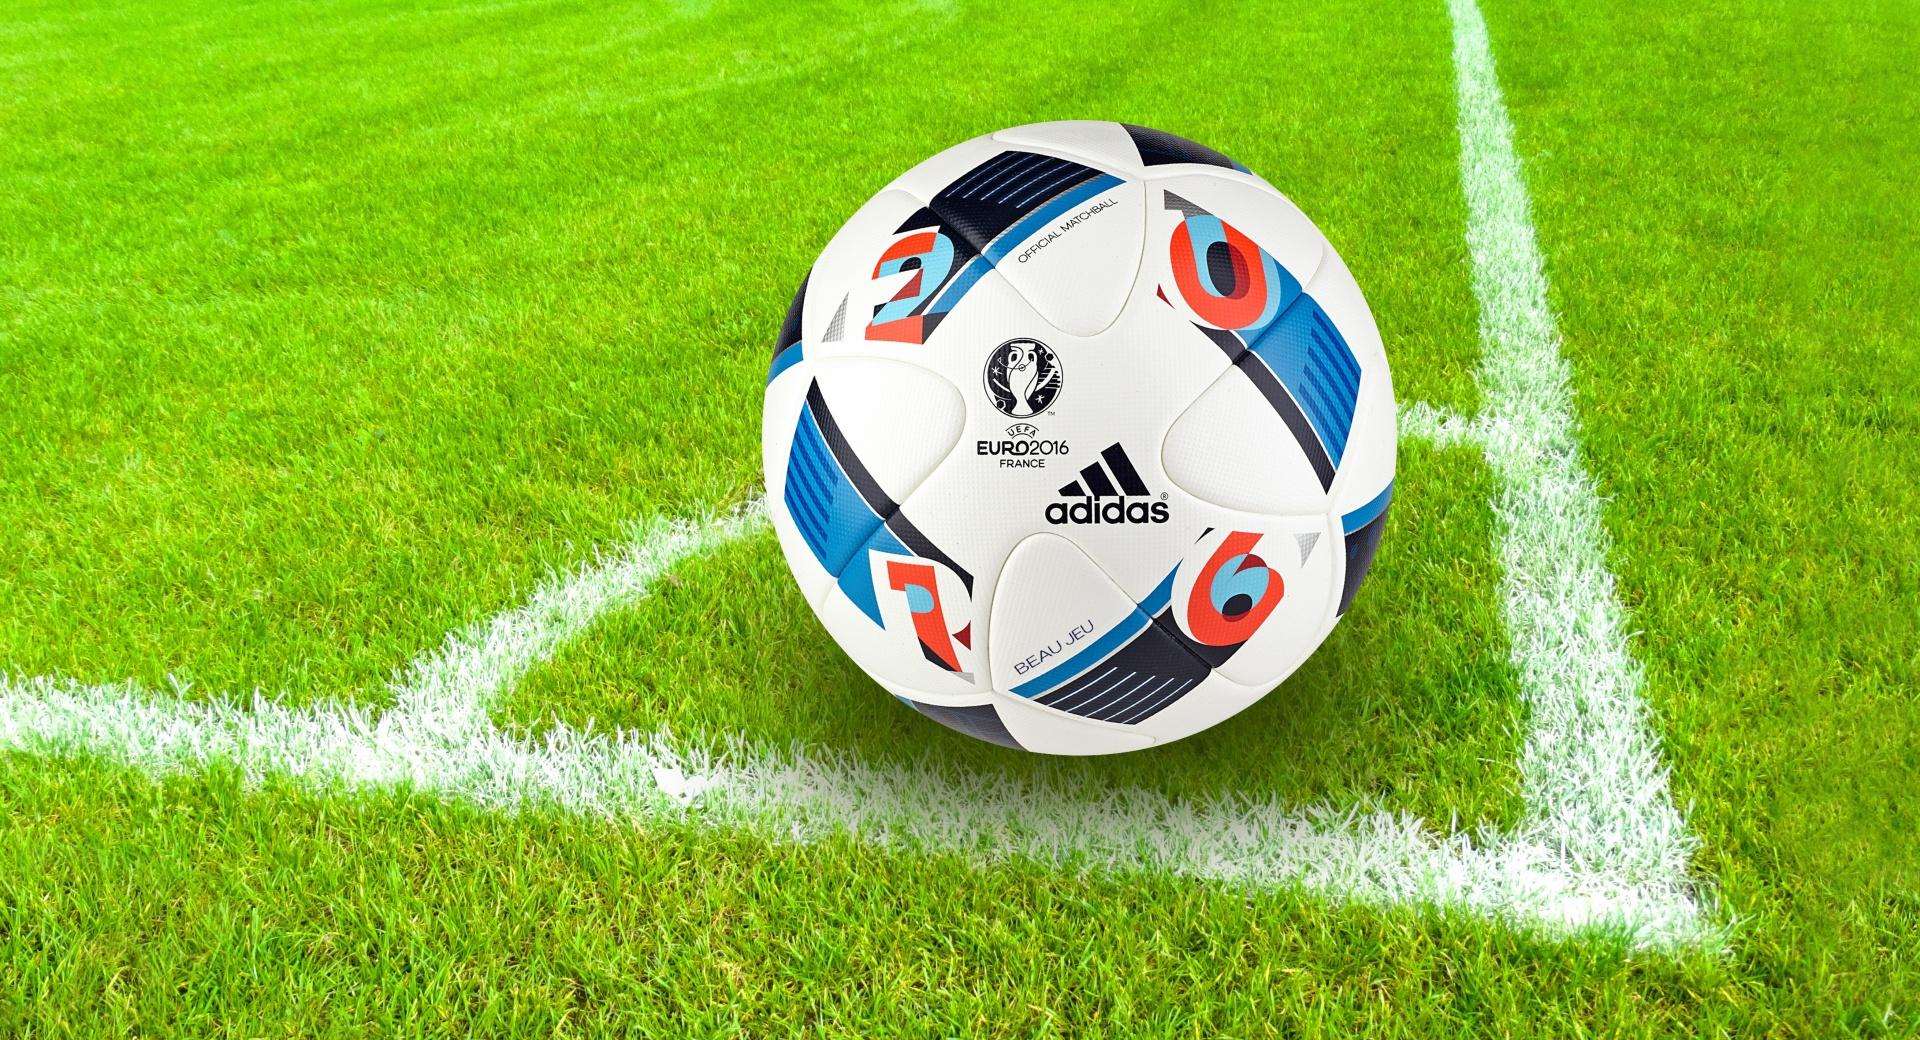 UEFA EURO 2016 Ball at 1024 x 1024 iPad size wallpapers HD quality